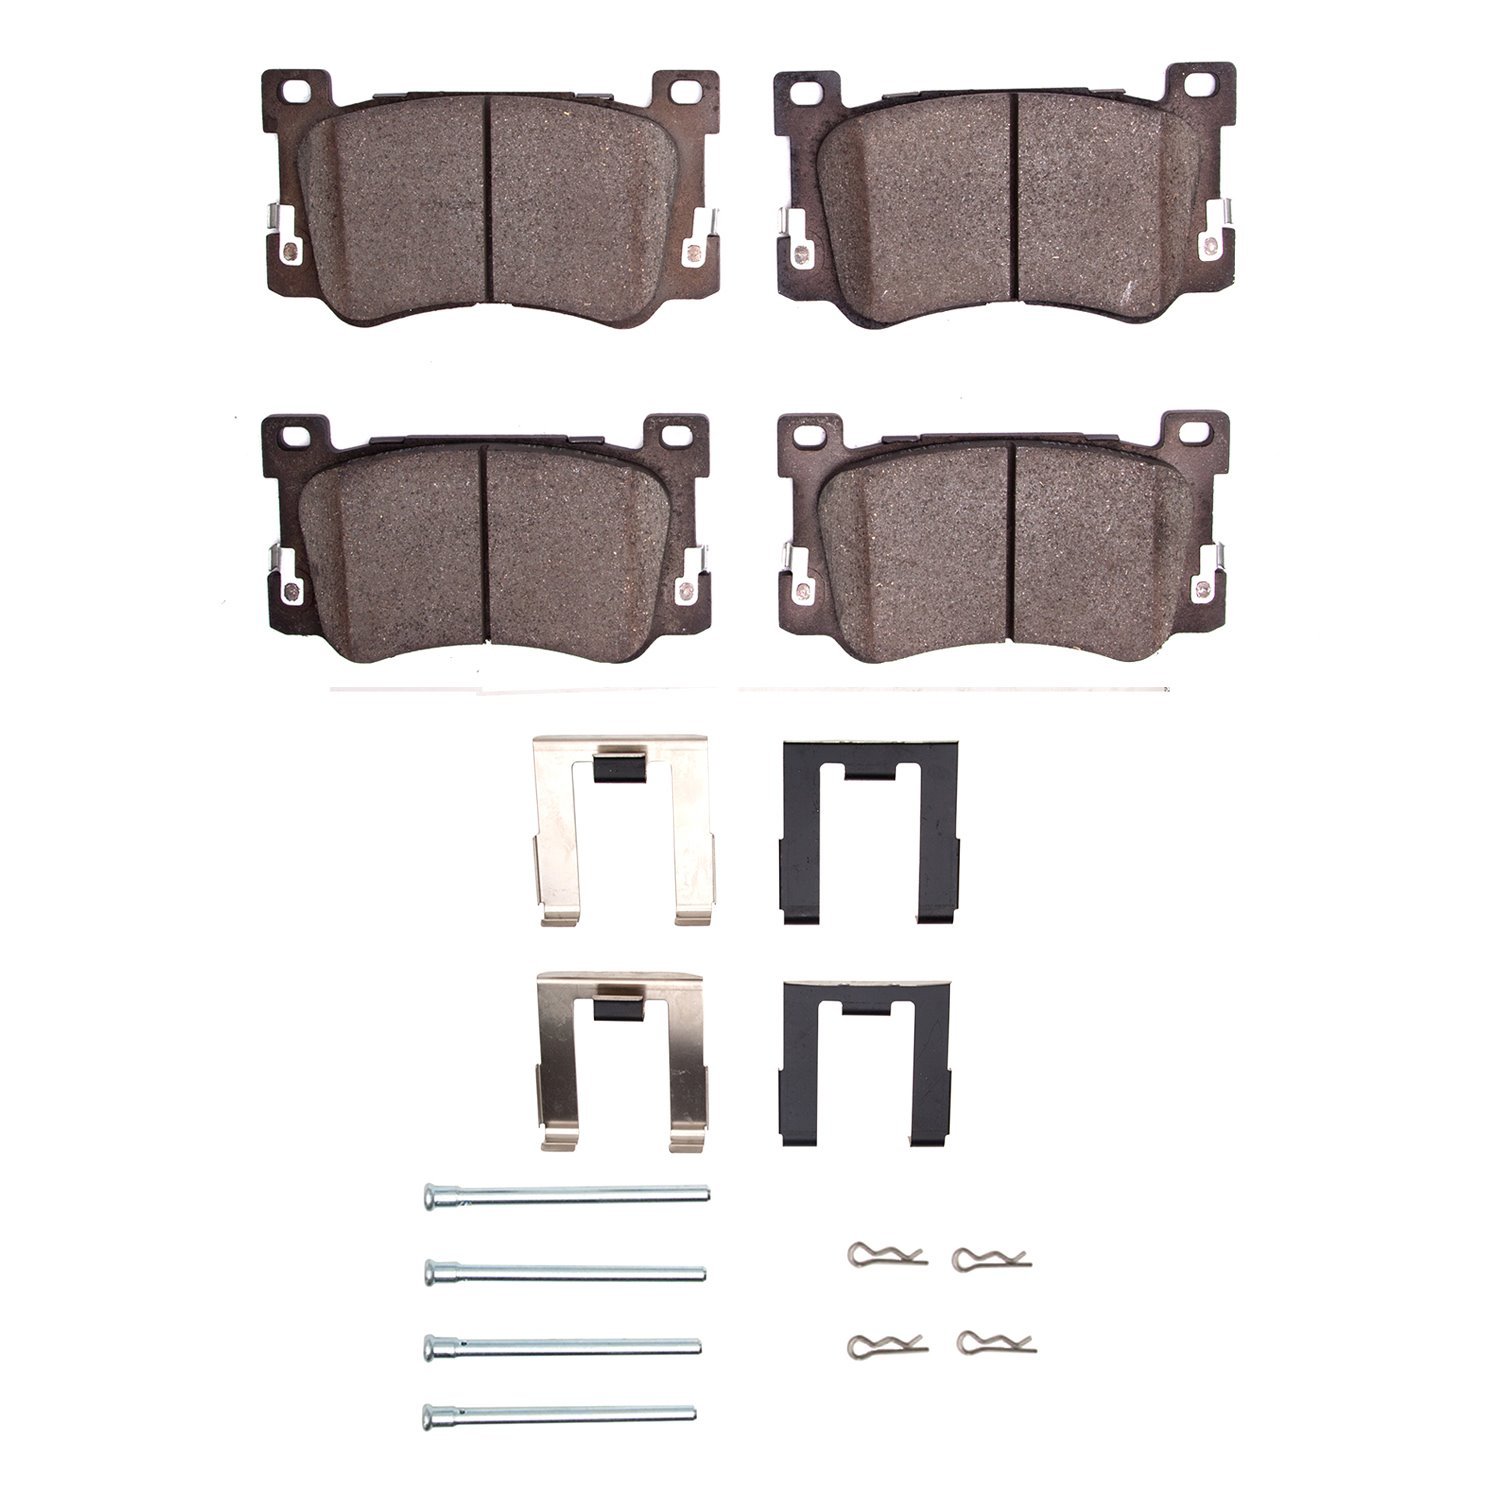 1310-1975-01 3000-Series Ceramic Brake Pads & Hardware Kit, Fits Select Kia/Hyundai/Genesis, Position: Front